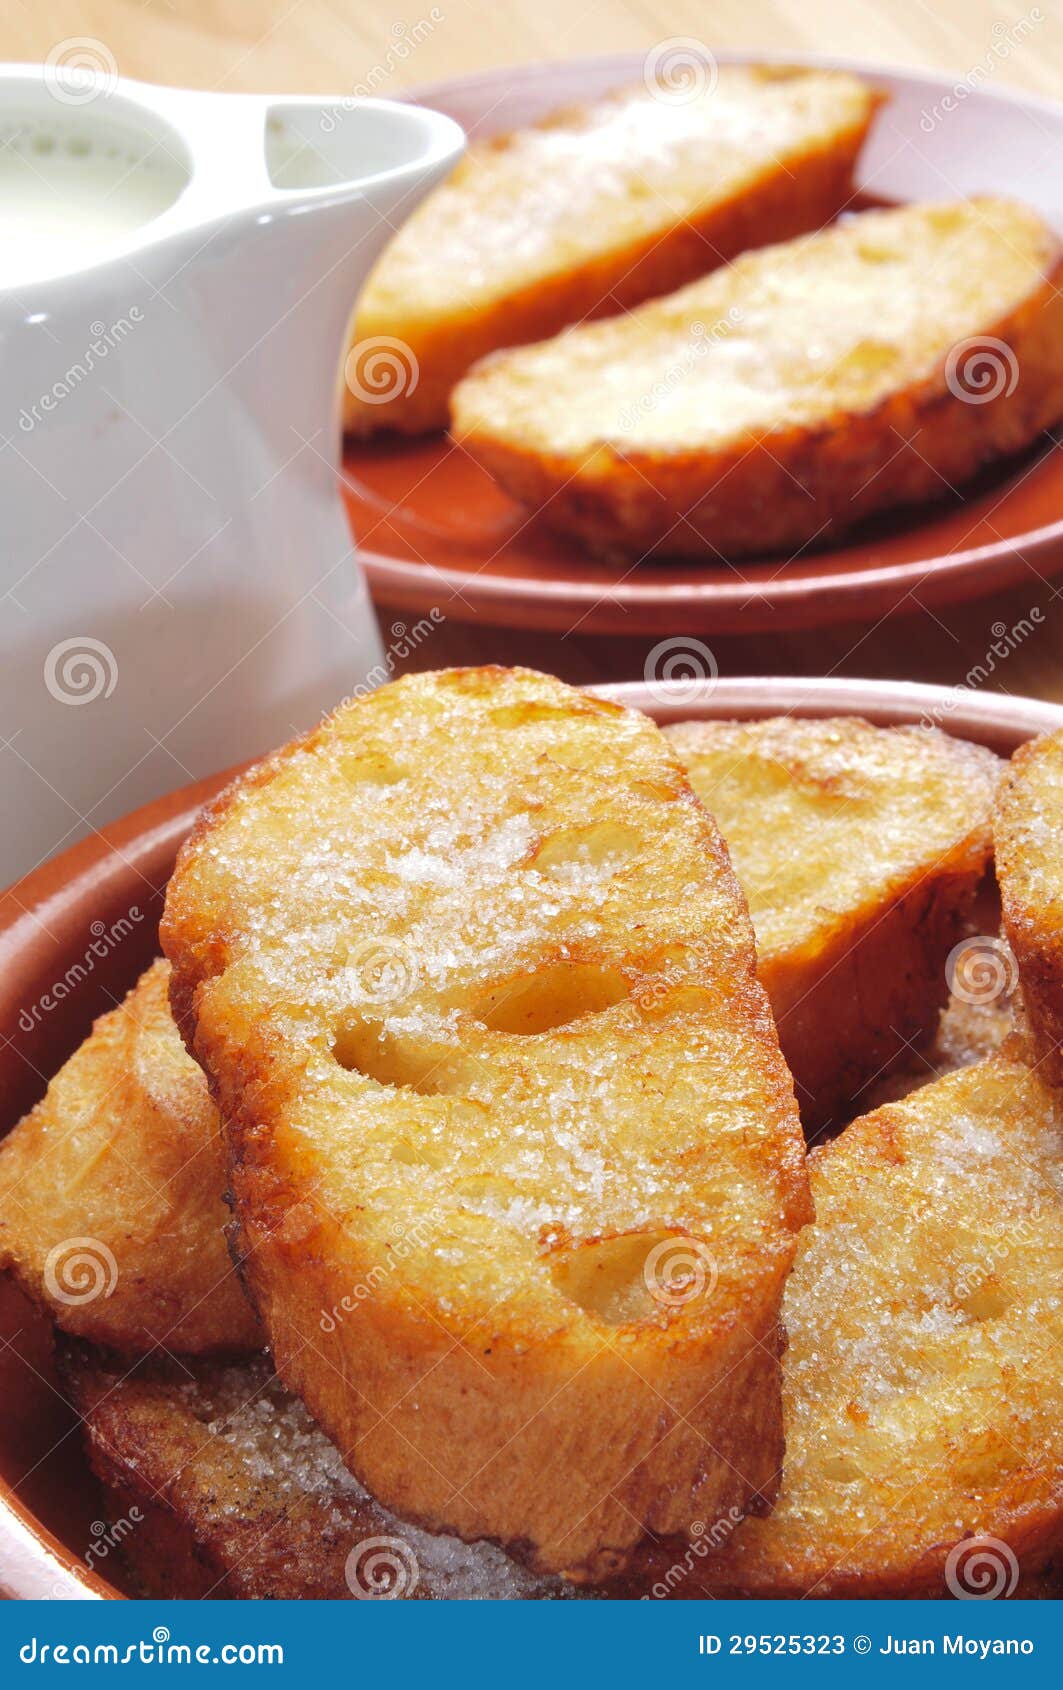 torrijas, typical spanish dessert for lent and easter